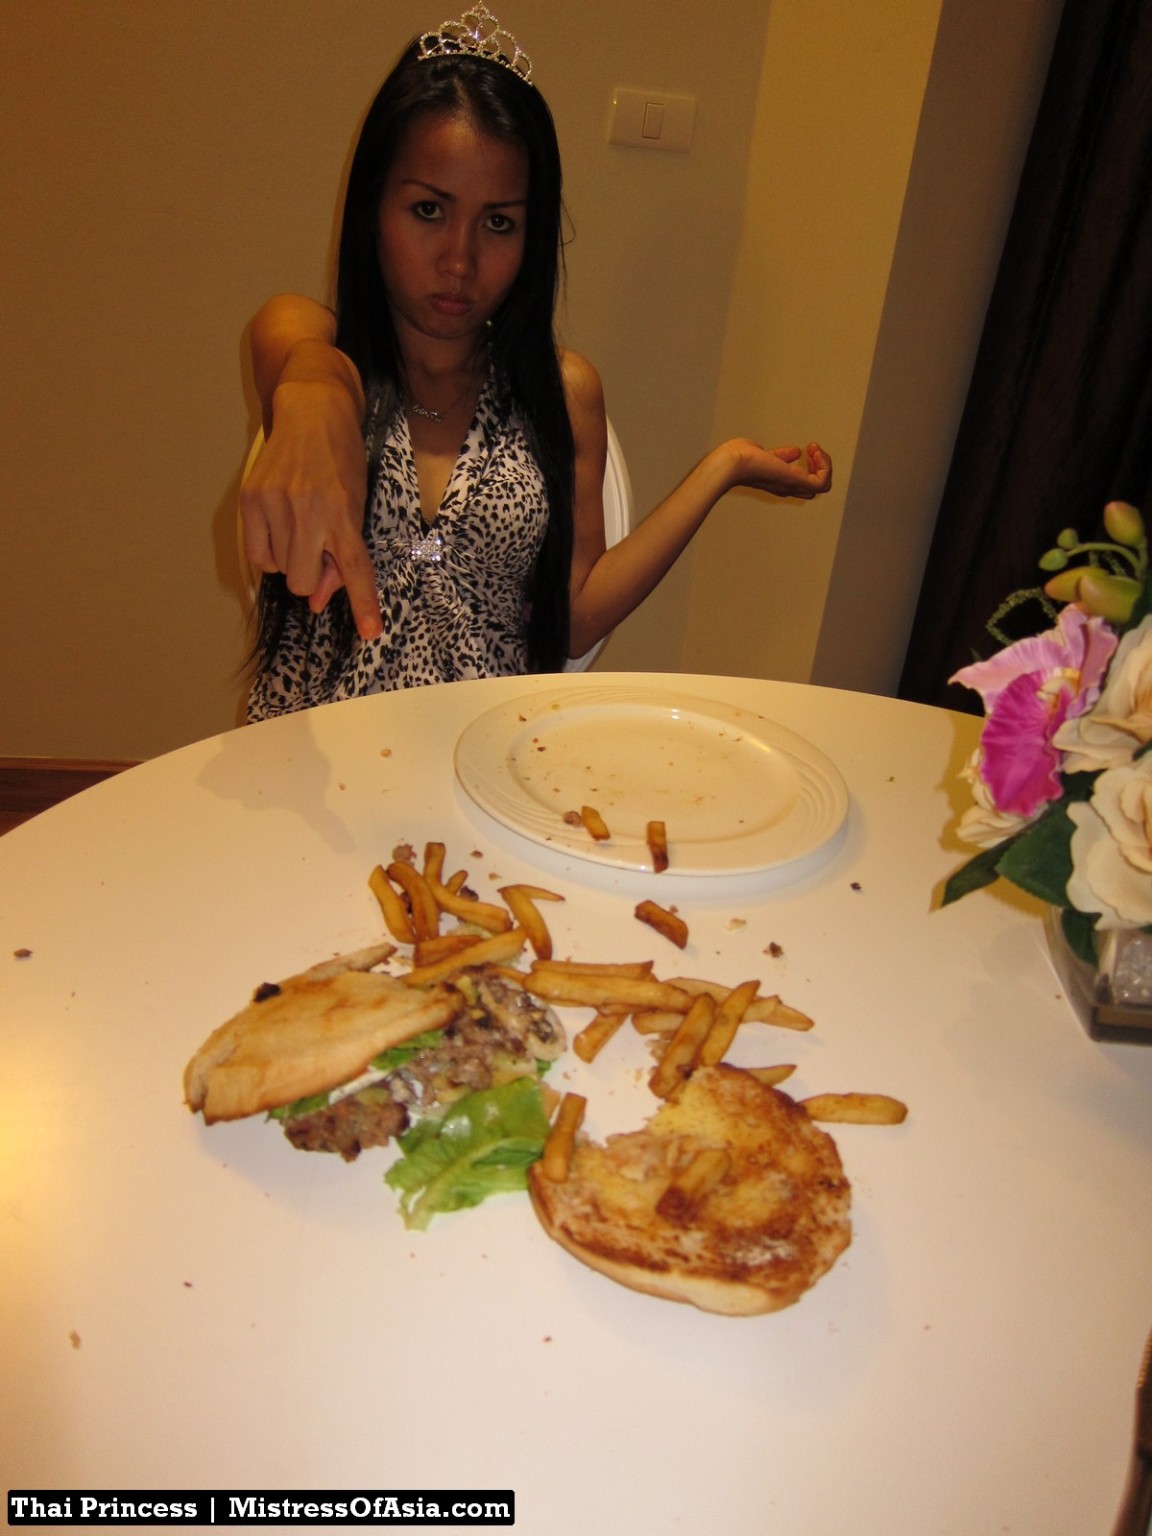 Princesse thaïlandaise mangeant un hamburger
 #69740320